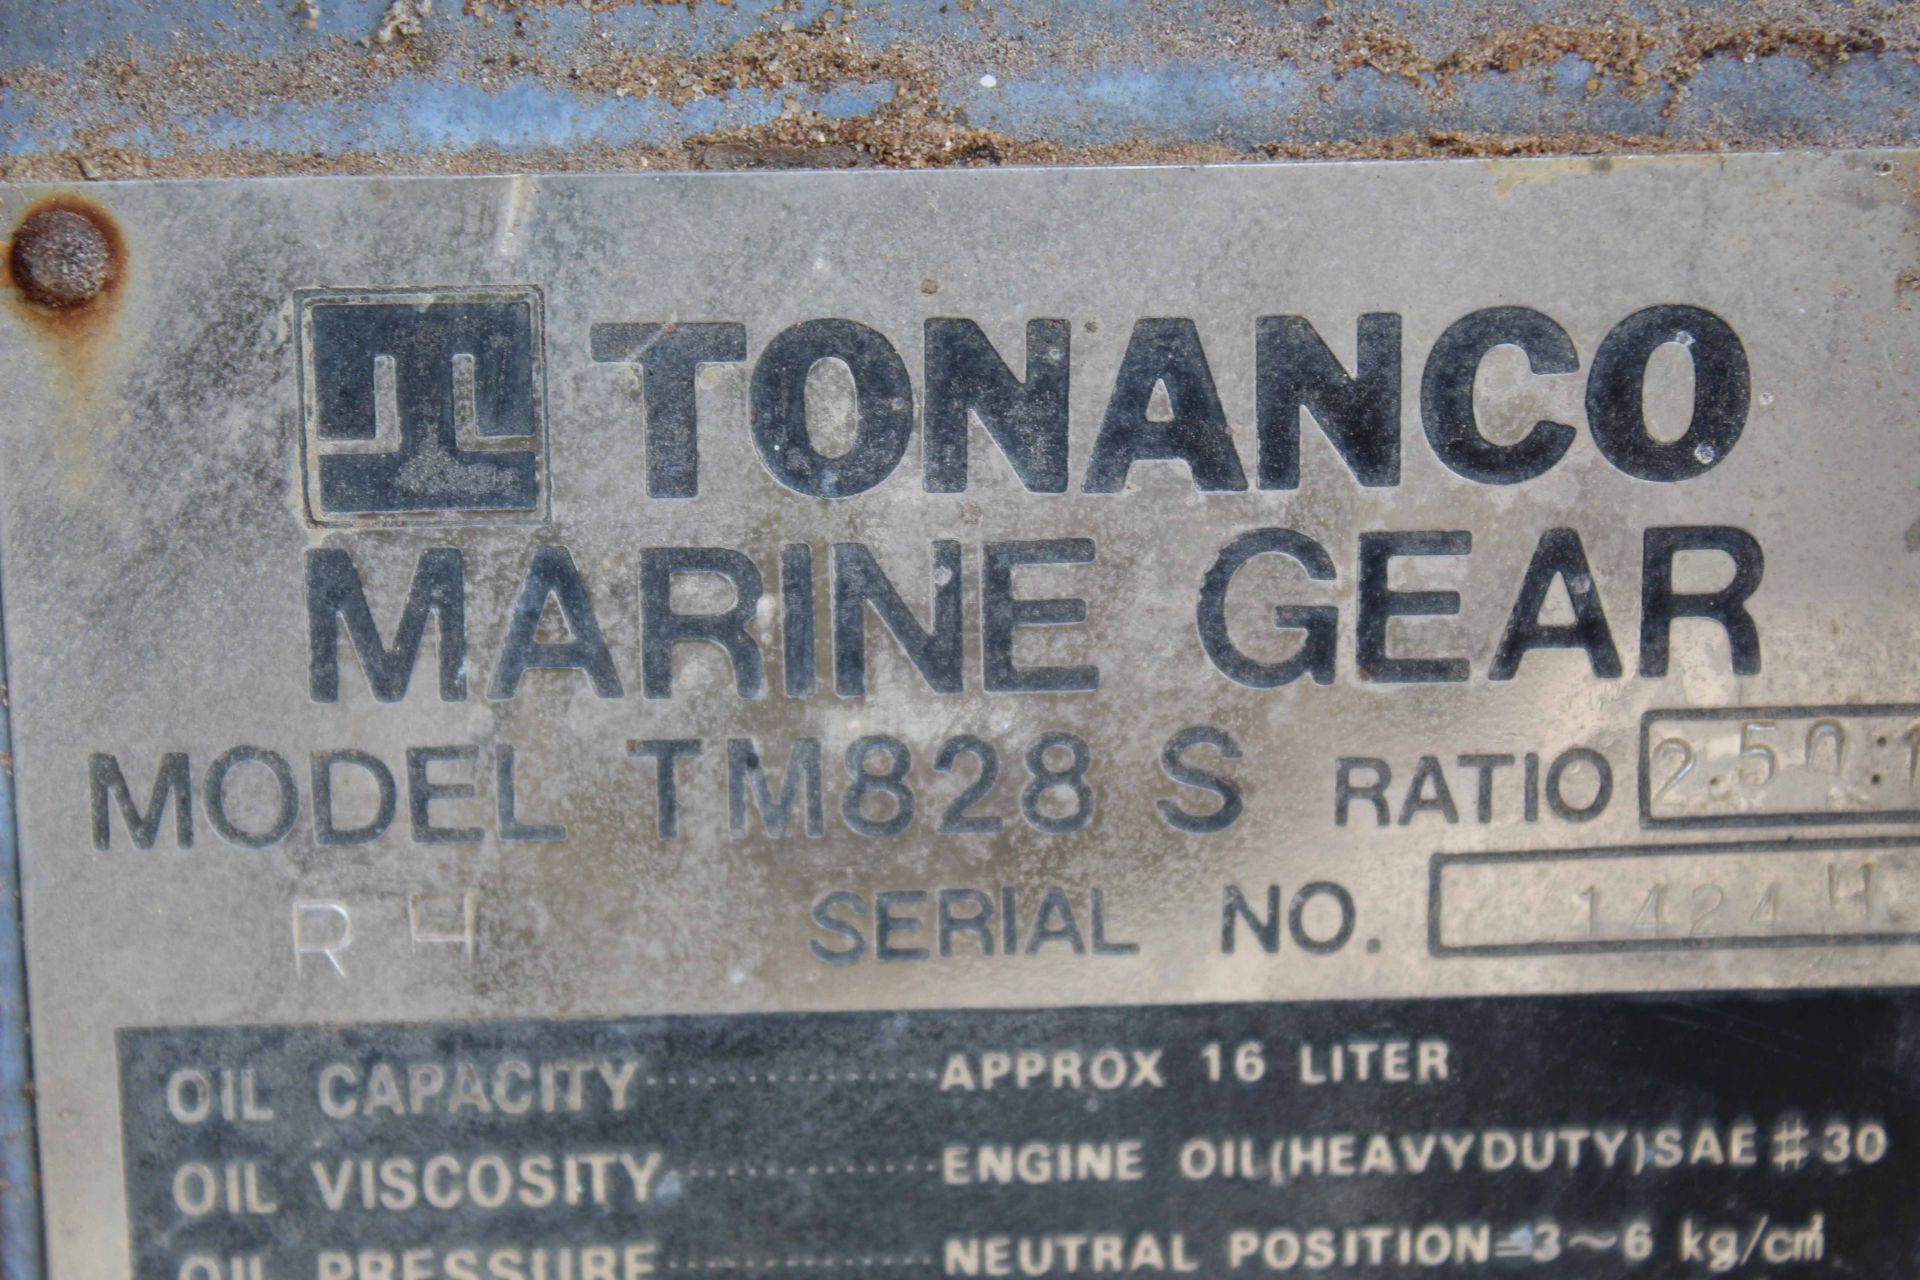 TRANSMISSION / GEAR BOX, TONANCO MARINE GEAR MDL. TM828-S, Ratio: 2.50:1, S/N 1424H - Image 5 of 6